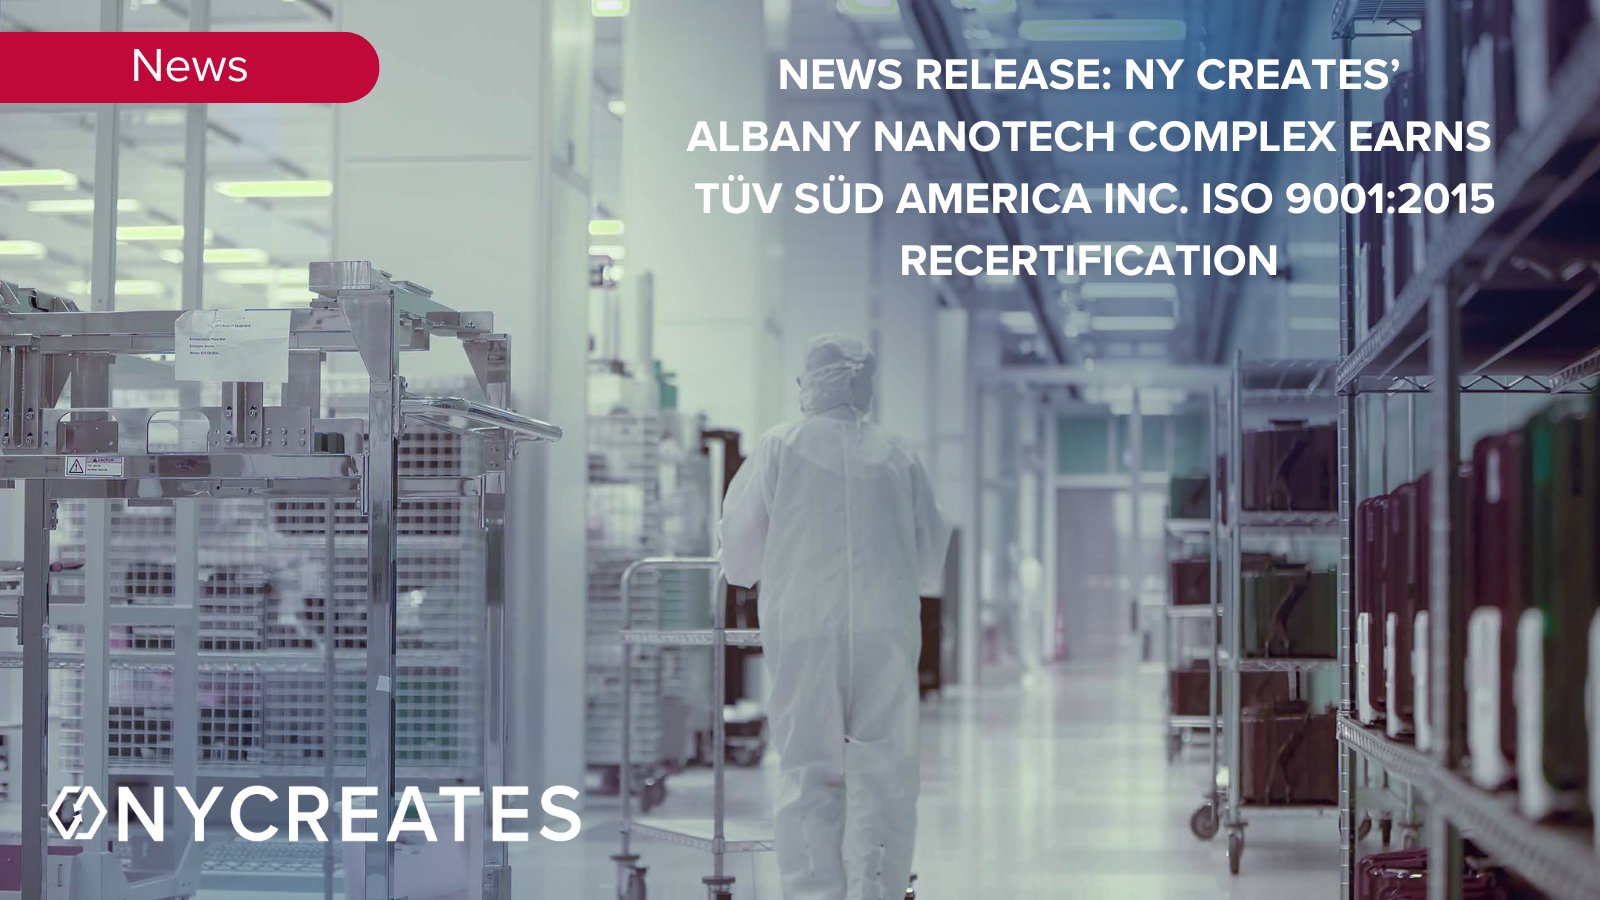 News Release: NY CREATES’ Albany NanoTech Complex Earns TÜV SÜD AMERICA INC. ISO 9001:2015 Recertification